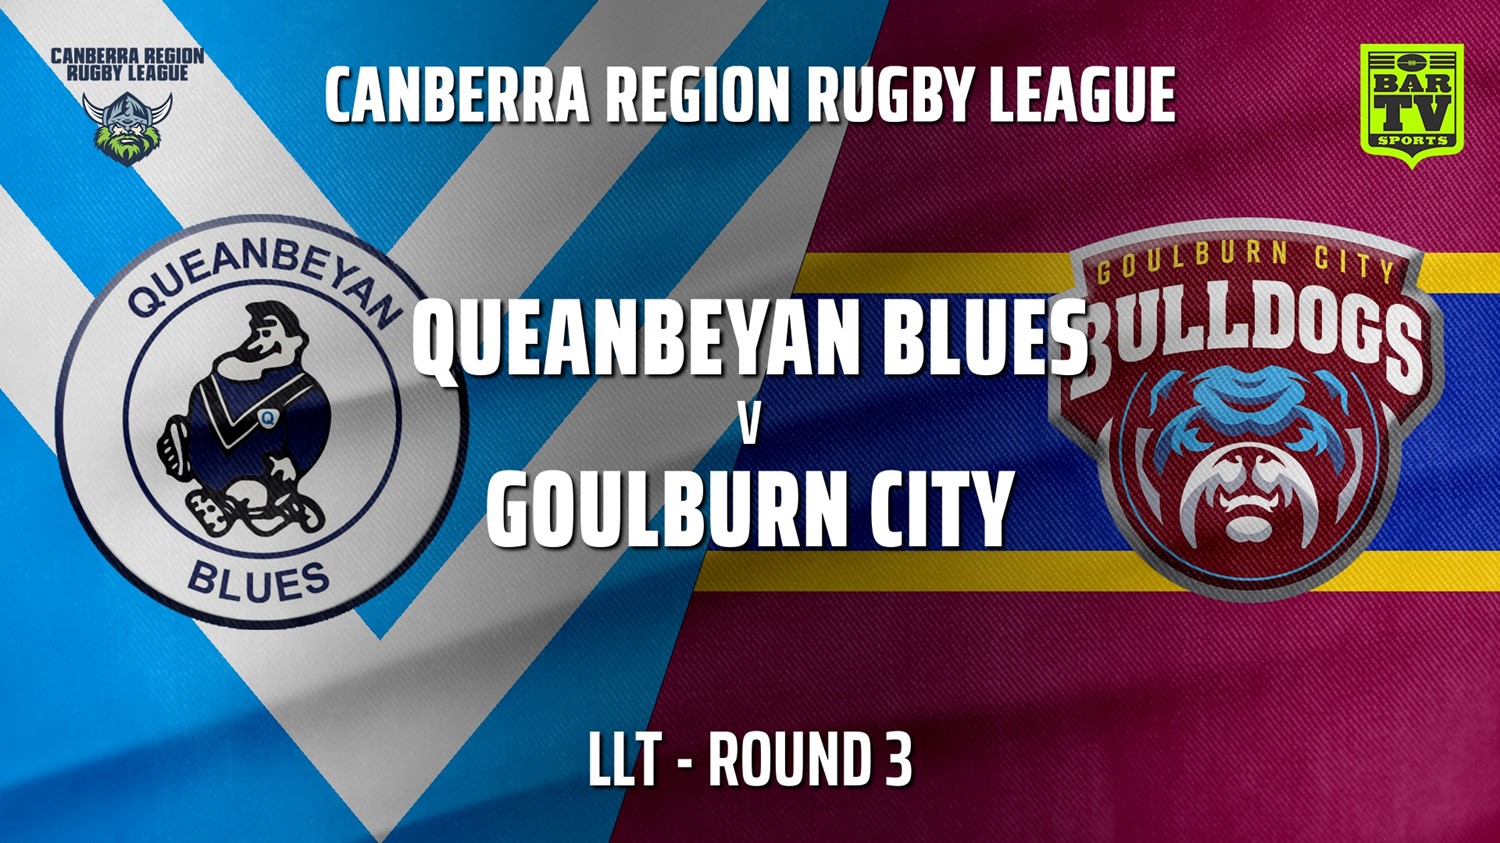 210421-CRRL Round 3 - LLT - Queanbeyan Blues v Goulburn City Bulldogs Slate Image